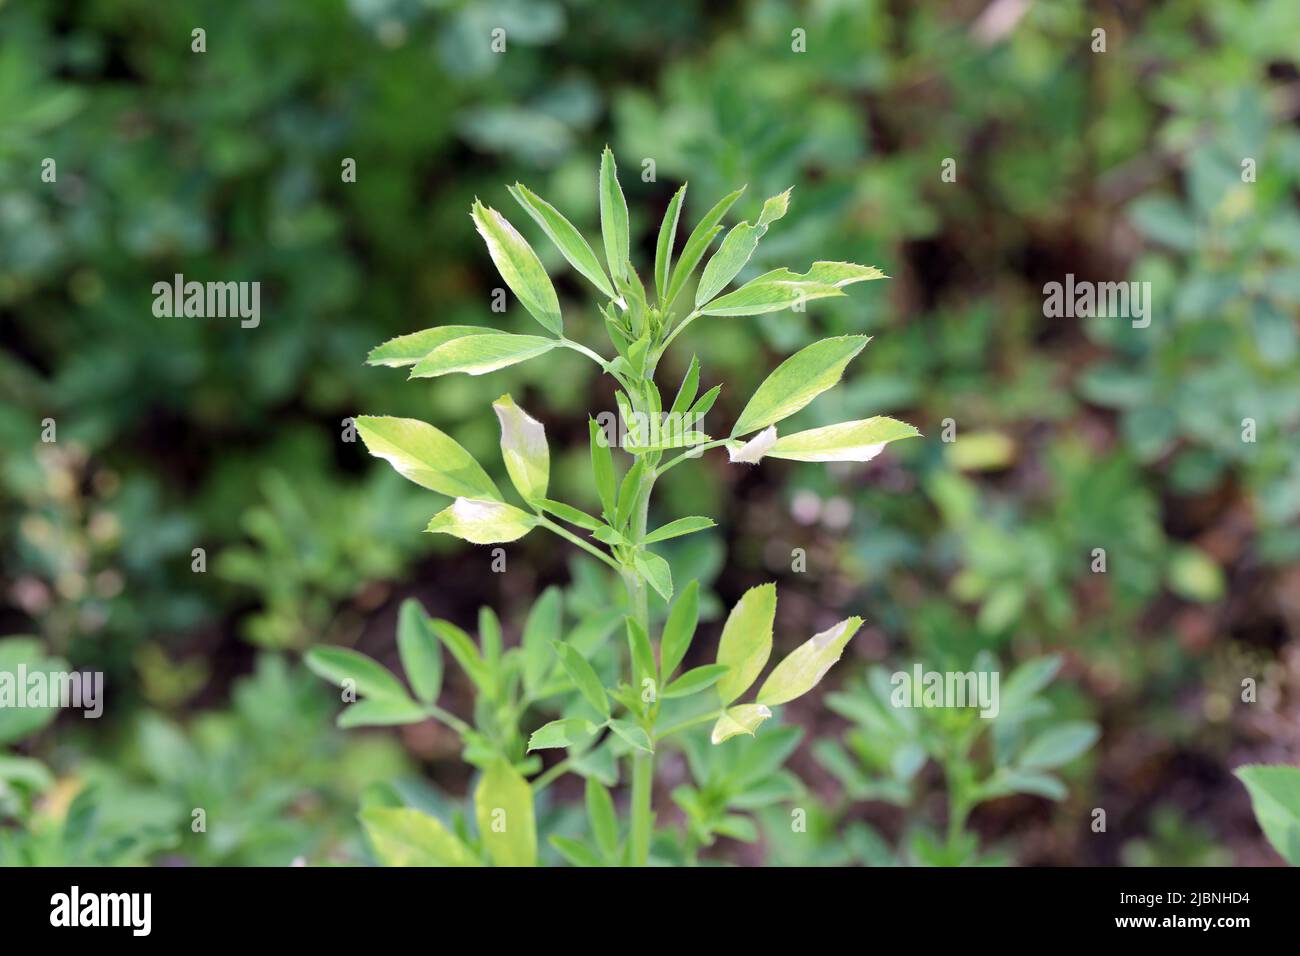 Alfalfa (Medicago sativa) disease, yellowing of leaves on crop. Stock Photo